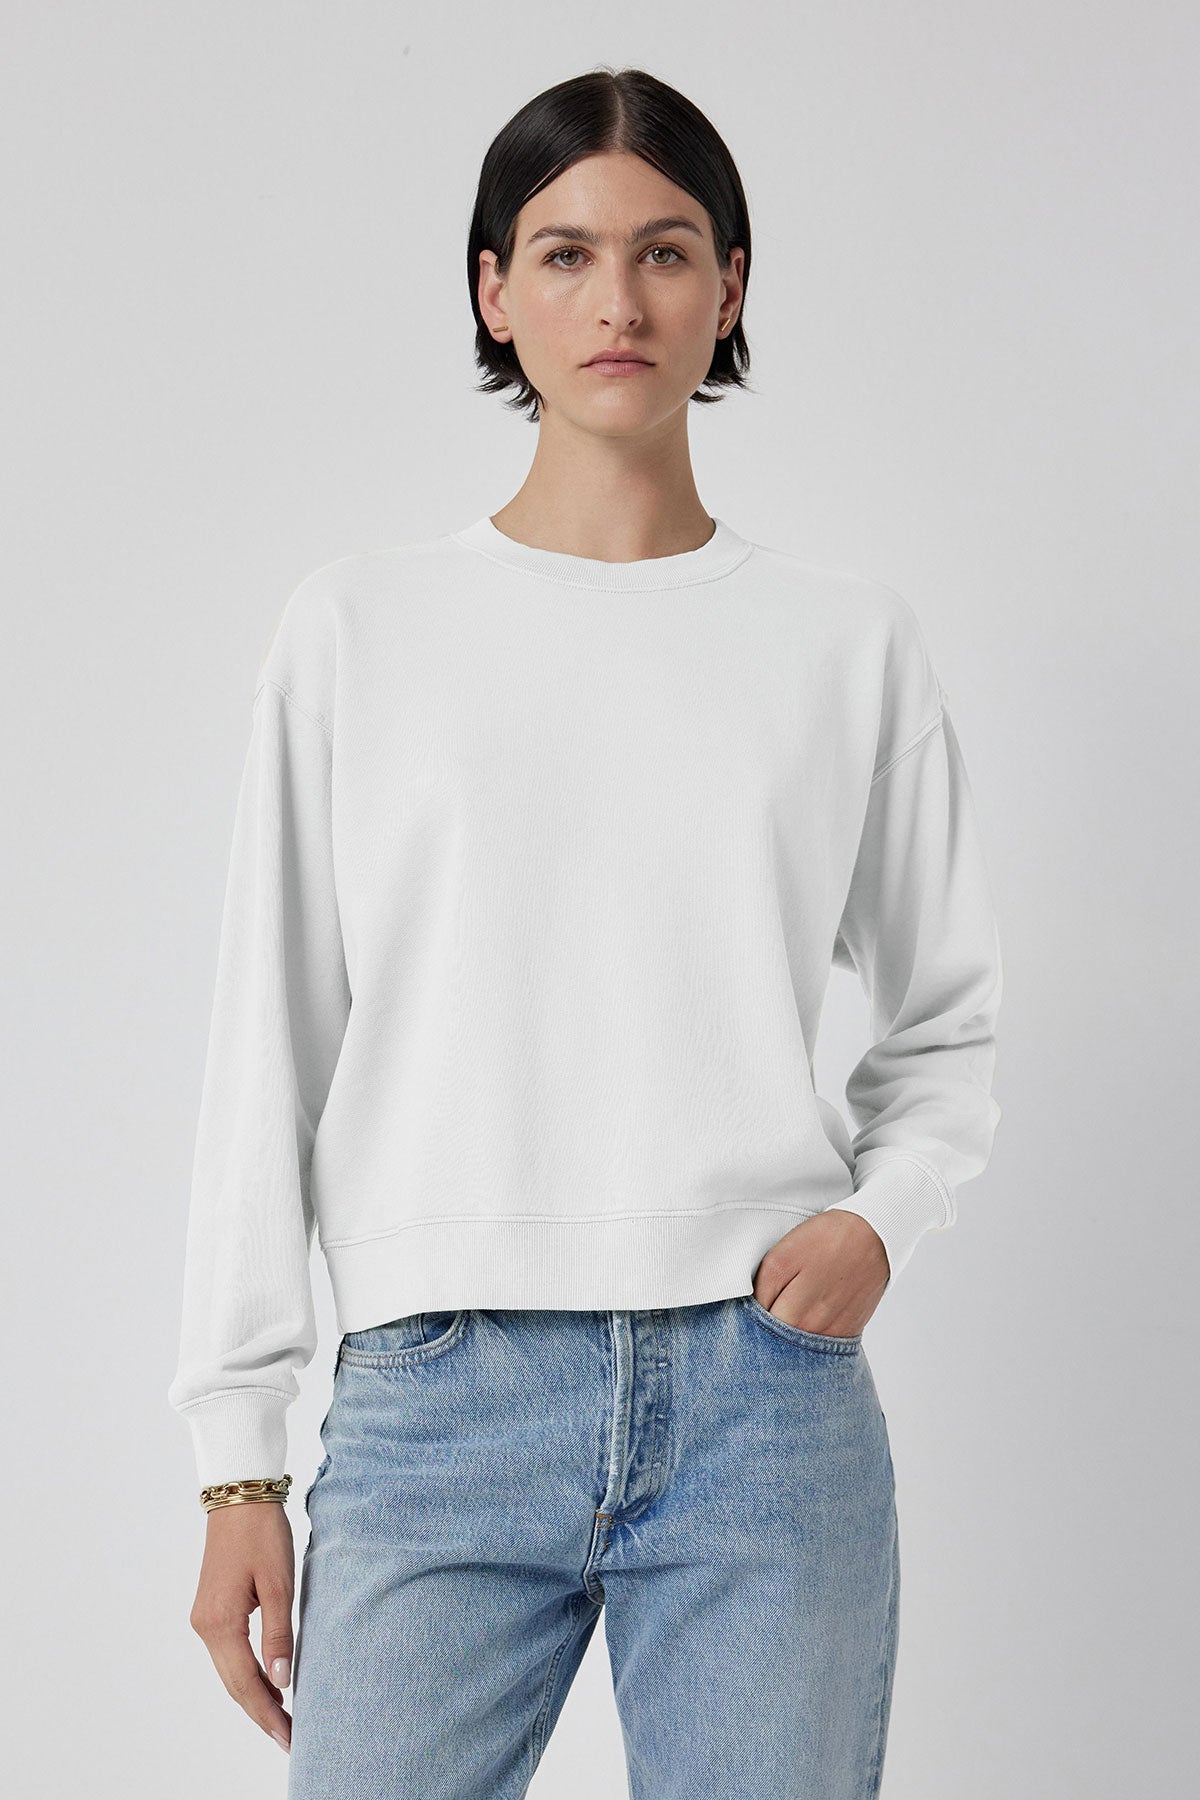 The model is wearing a Velvet by Jenny Graham YNEZ sweatshirt and jeans.-35678682153153